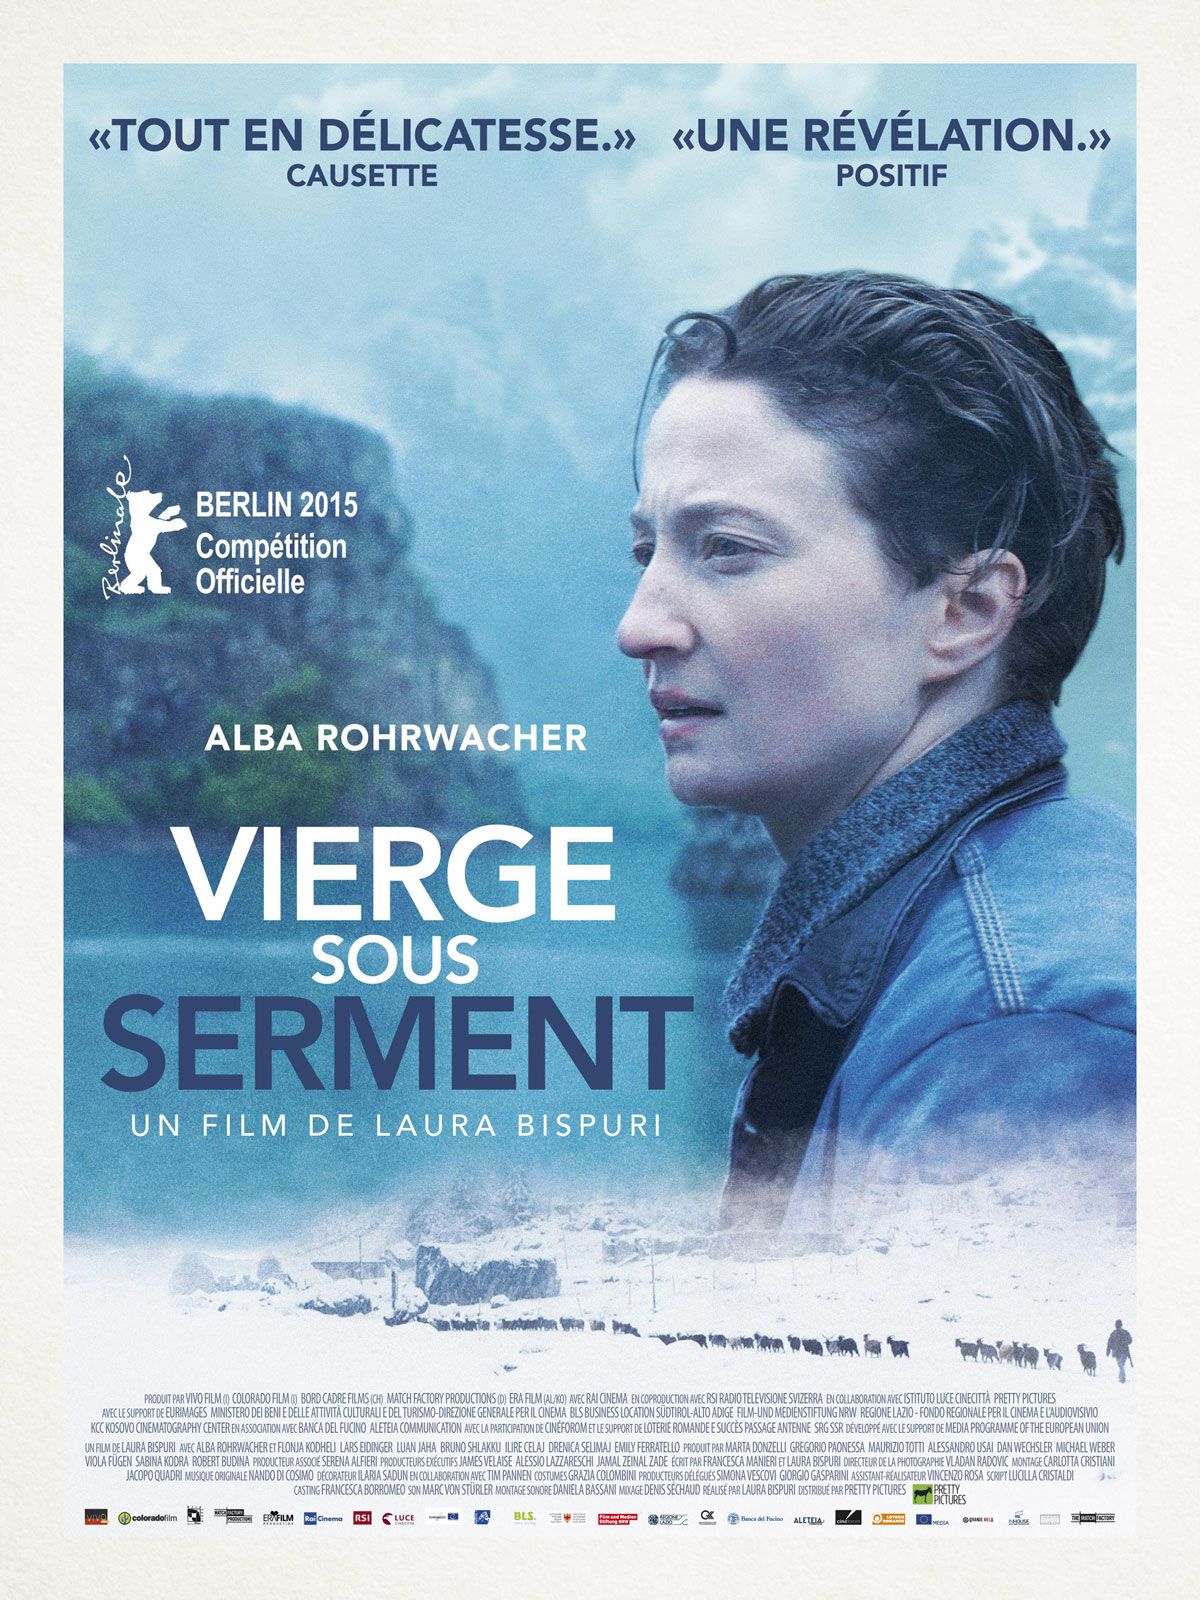 Vierge sous serment - Film (2015) streaming VF gratuit complet